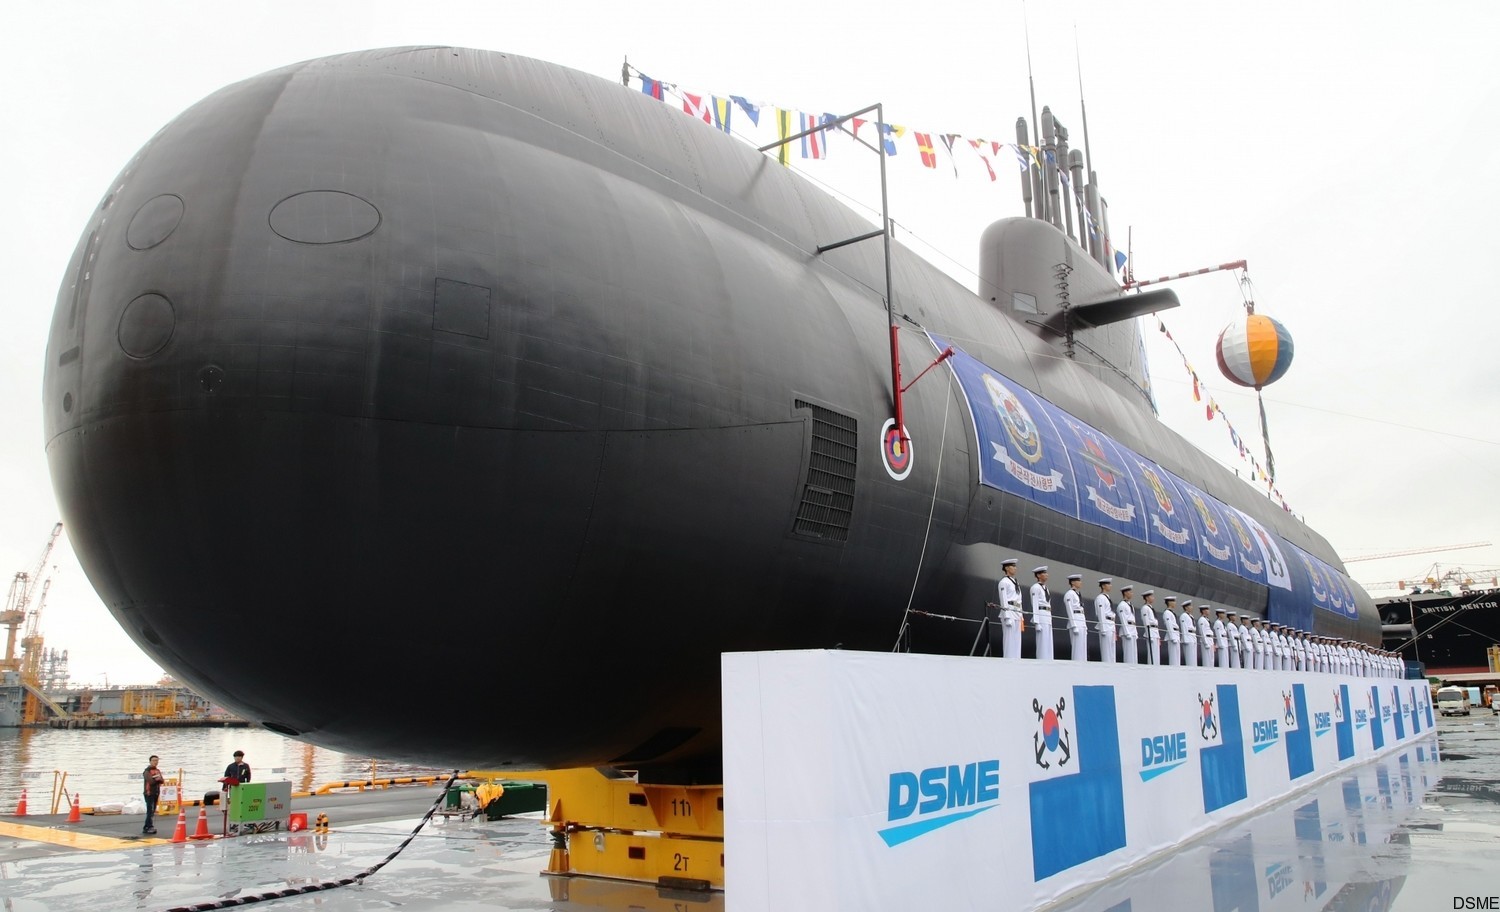 ss-083 roks dosan ahn changho class submarine kss-iii republic of korean navy rokn tiger shark torpedo ugm-84 harpoon ssm chonryong slcm missile hyonmoo cruise ballistic slbm 04 daewoo